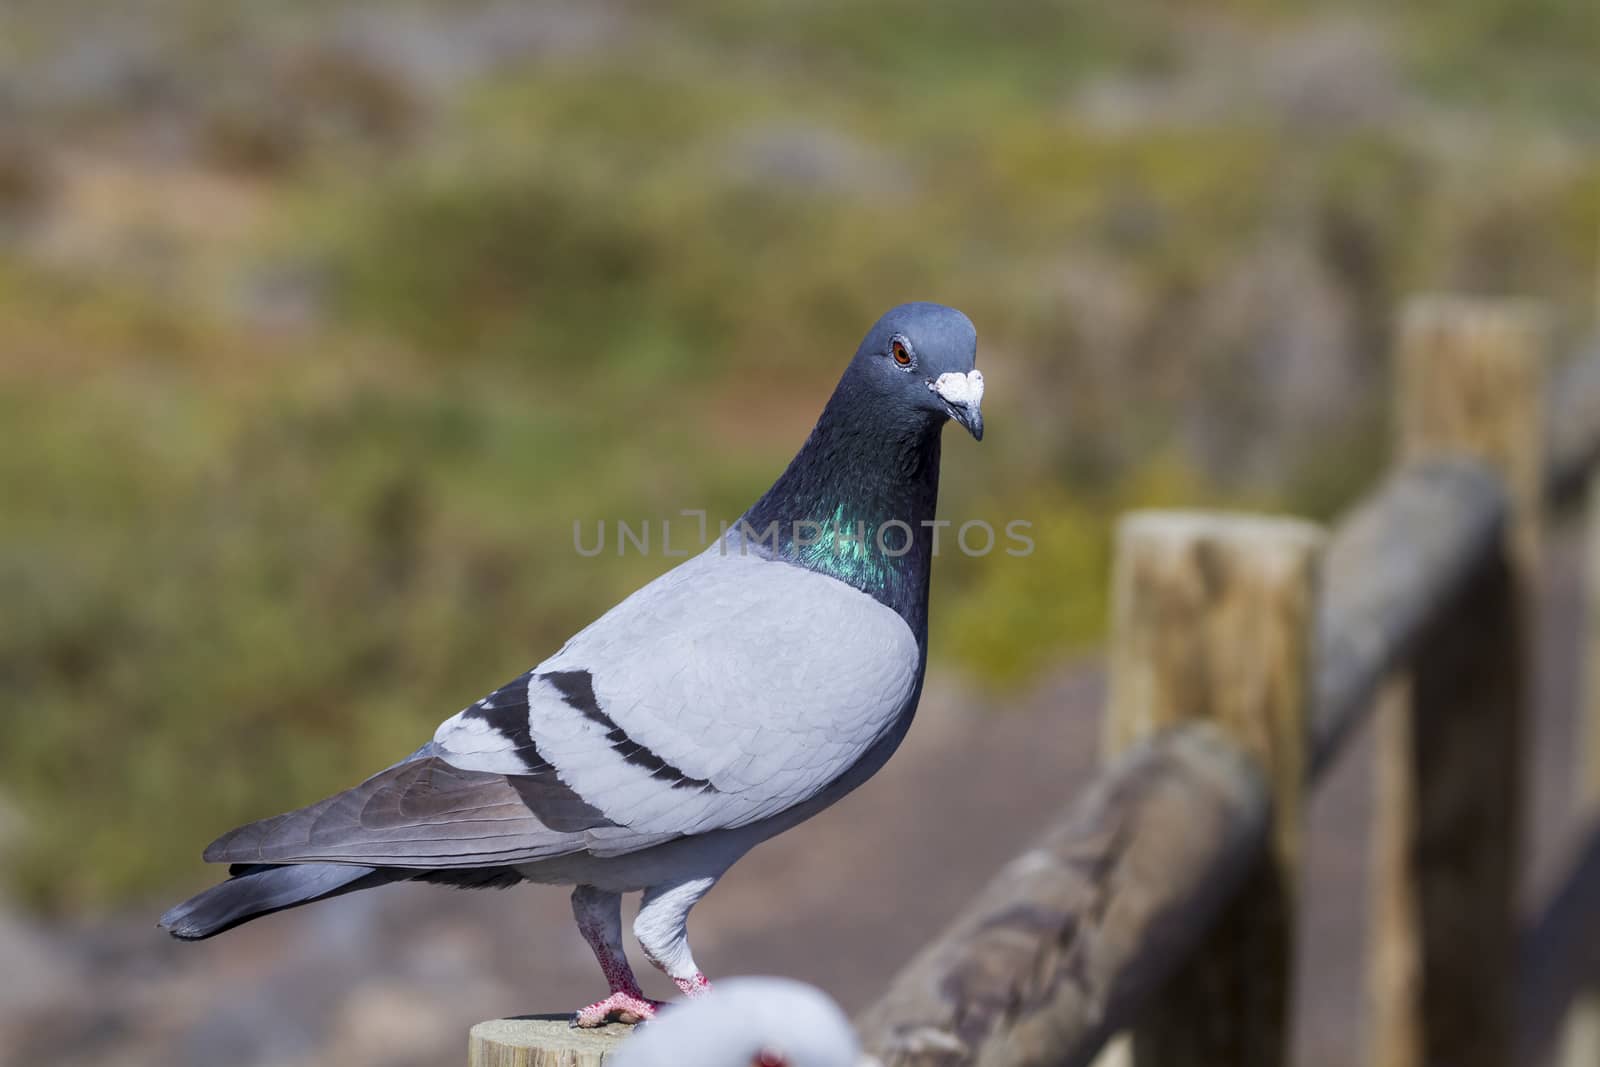 A Beautiful Pigeon in the wild closeup